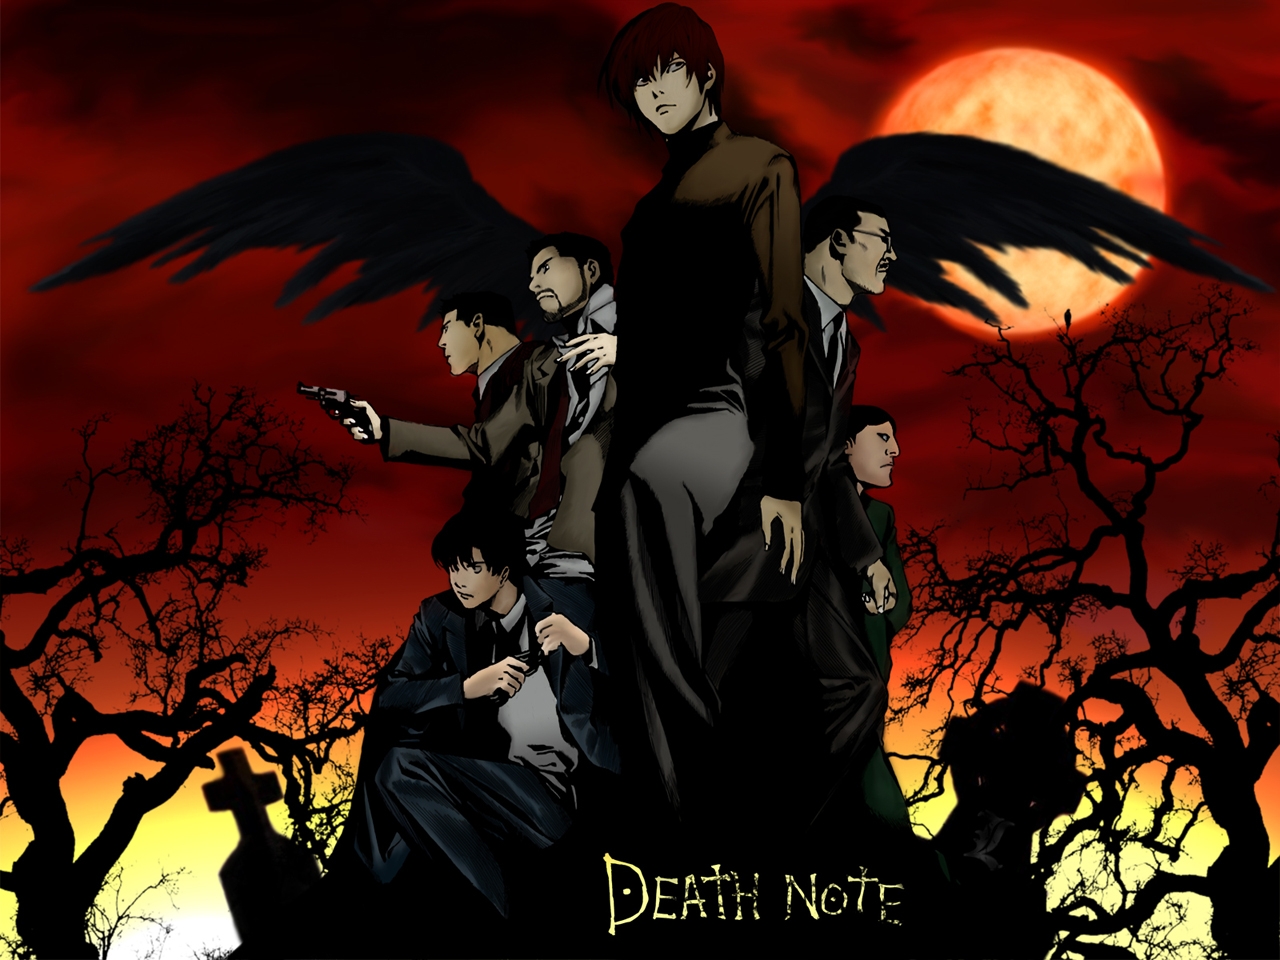 Death Note Image Wallpaper Photos